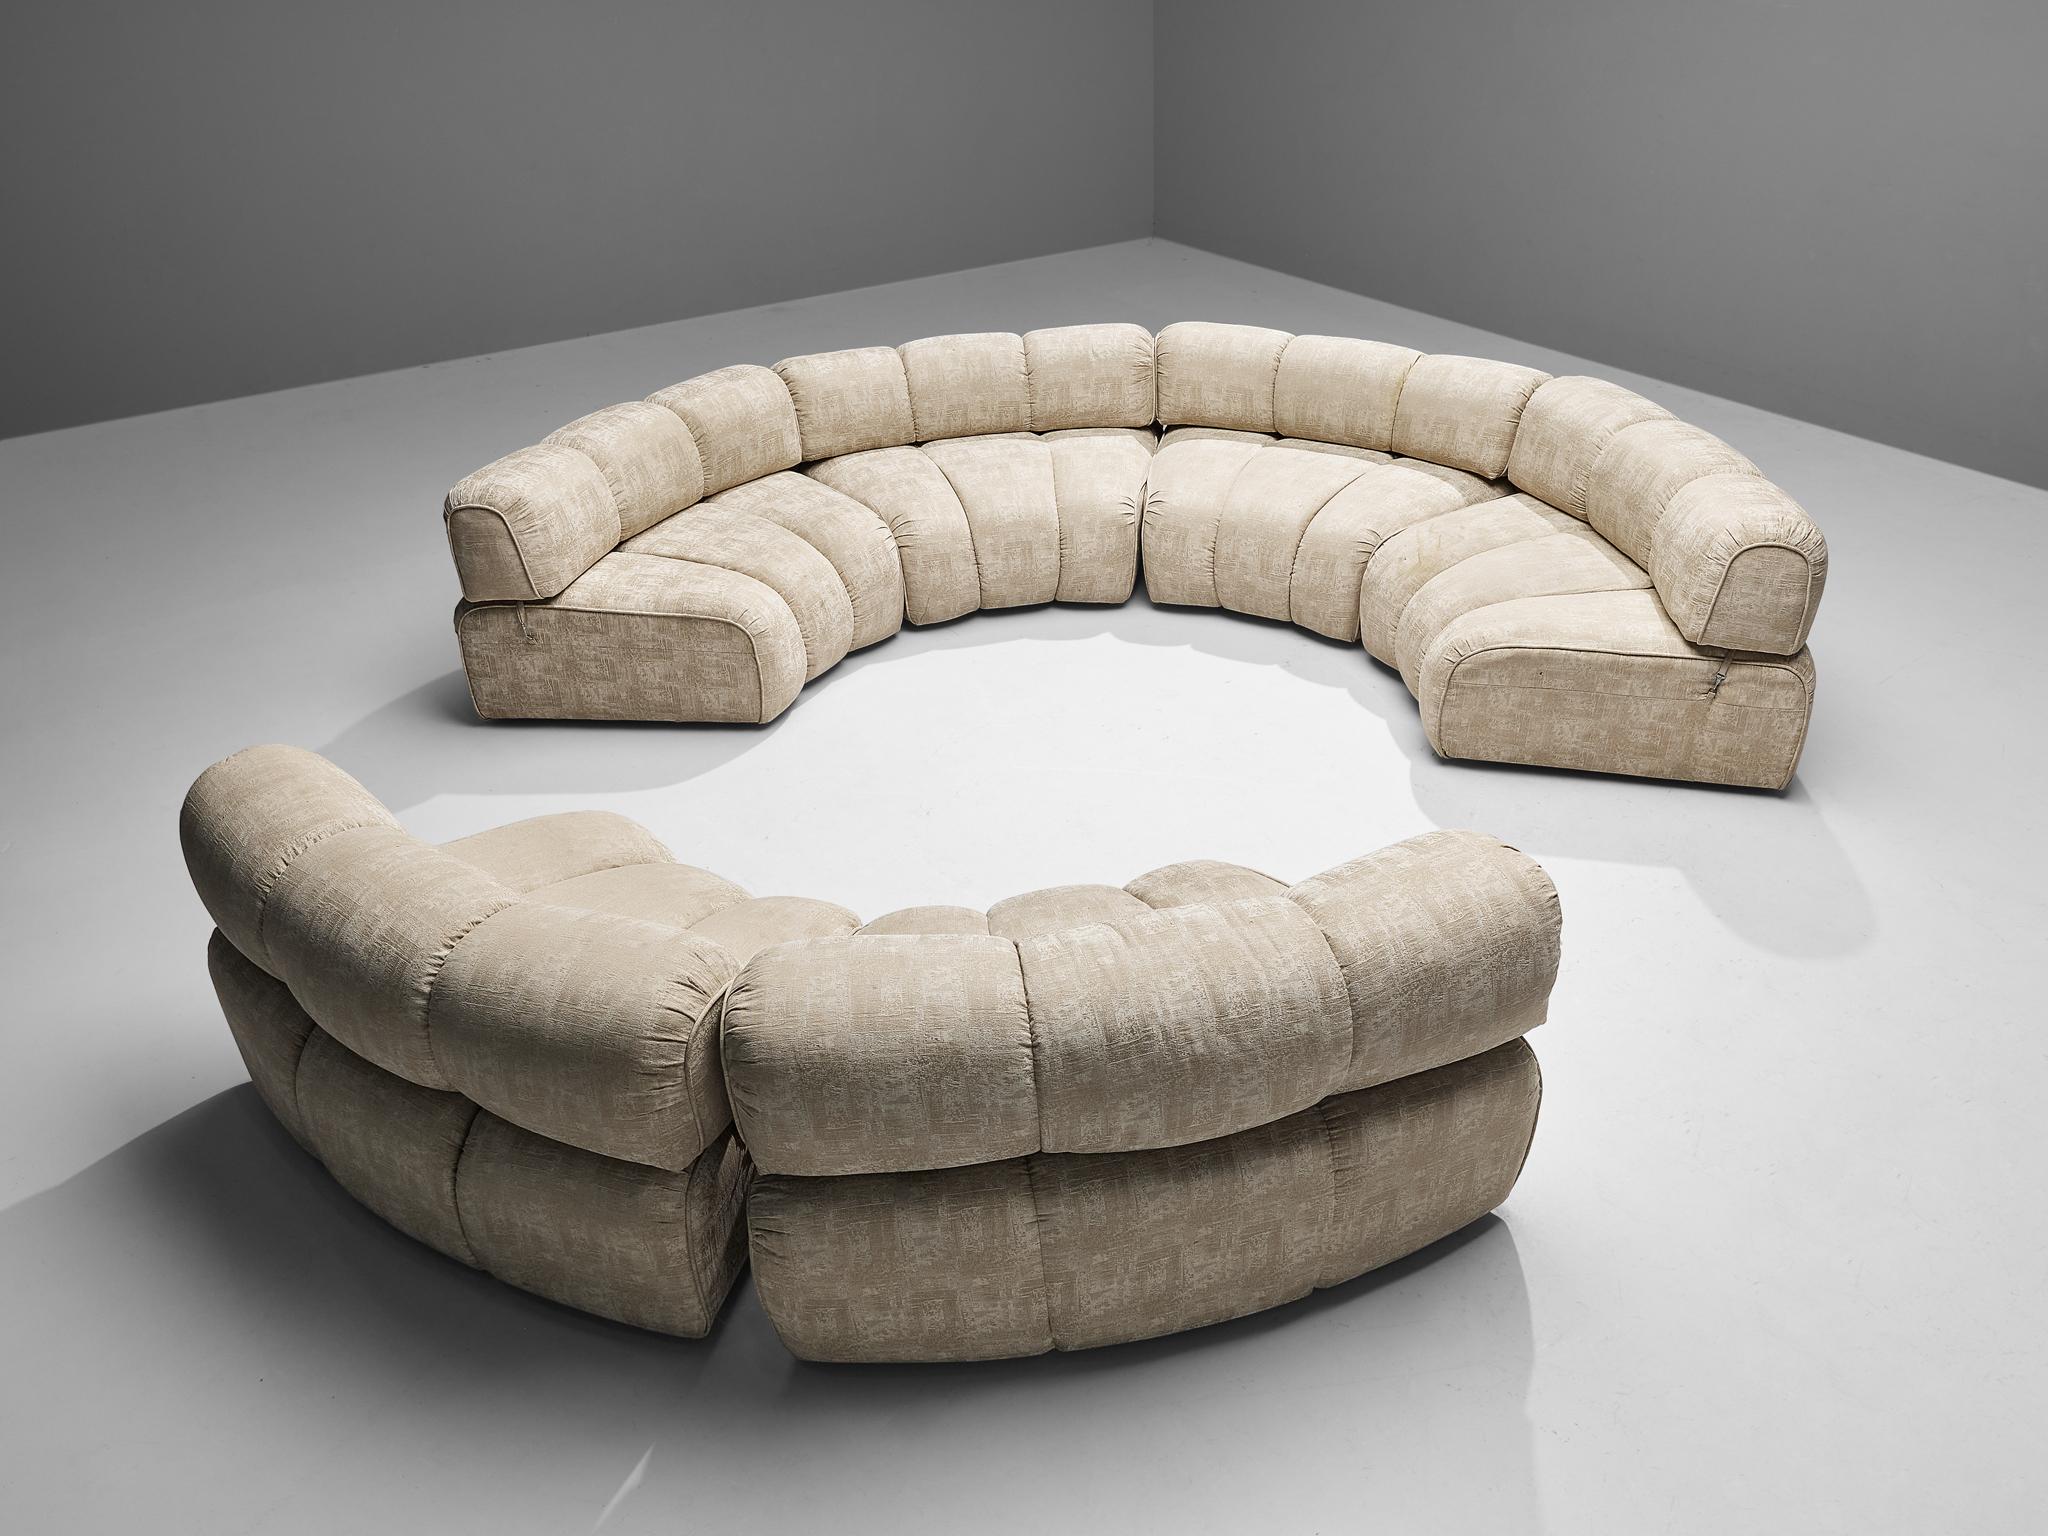 Modular 'Caterpillar' Sofa in Cream Upholstery 2